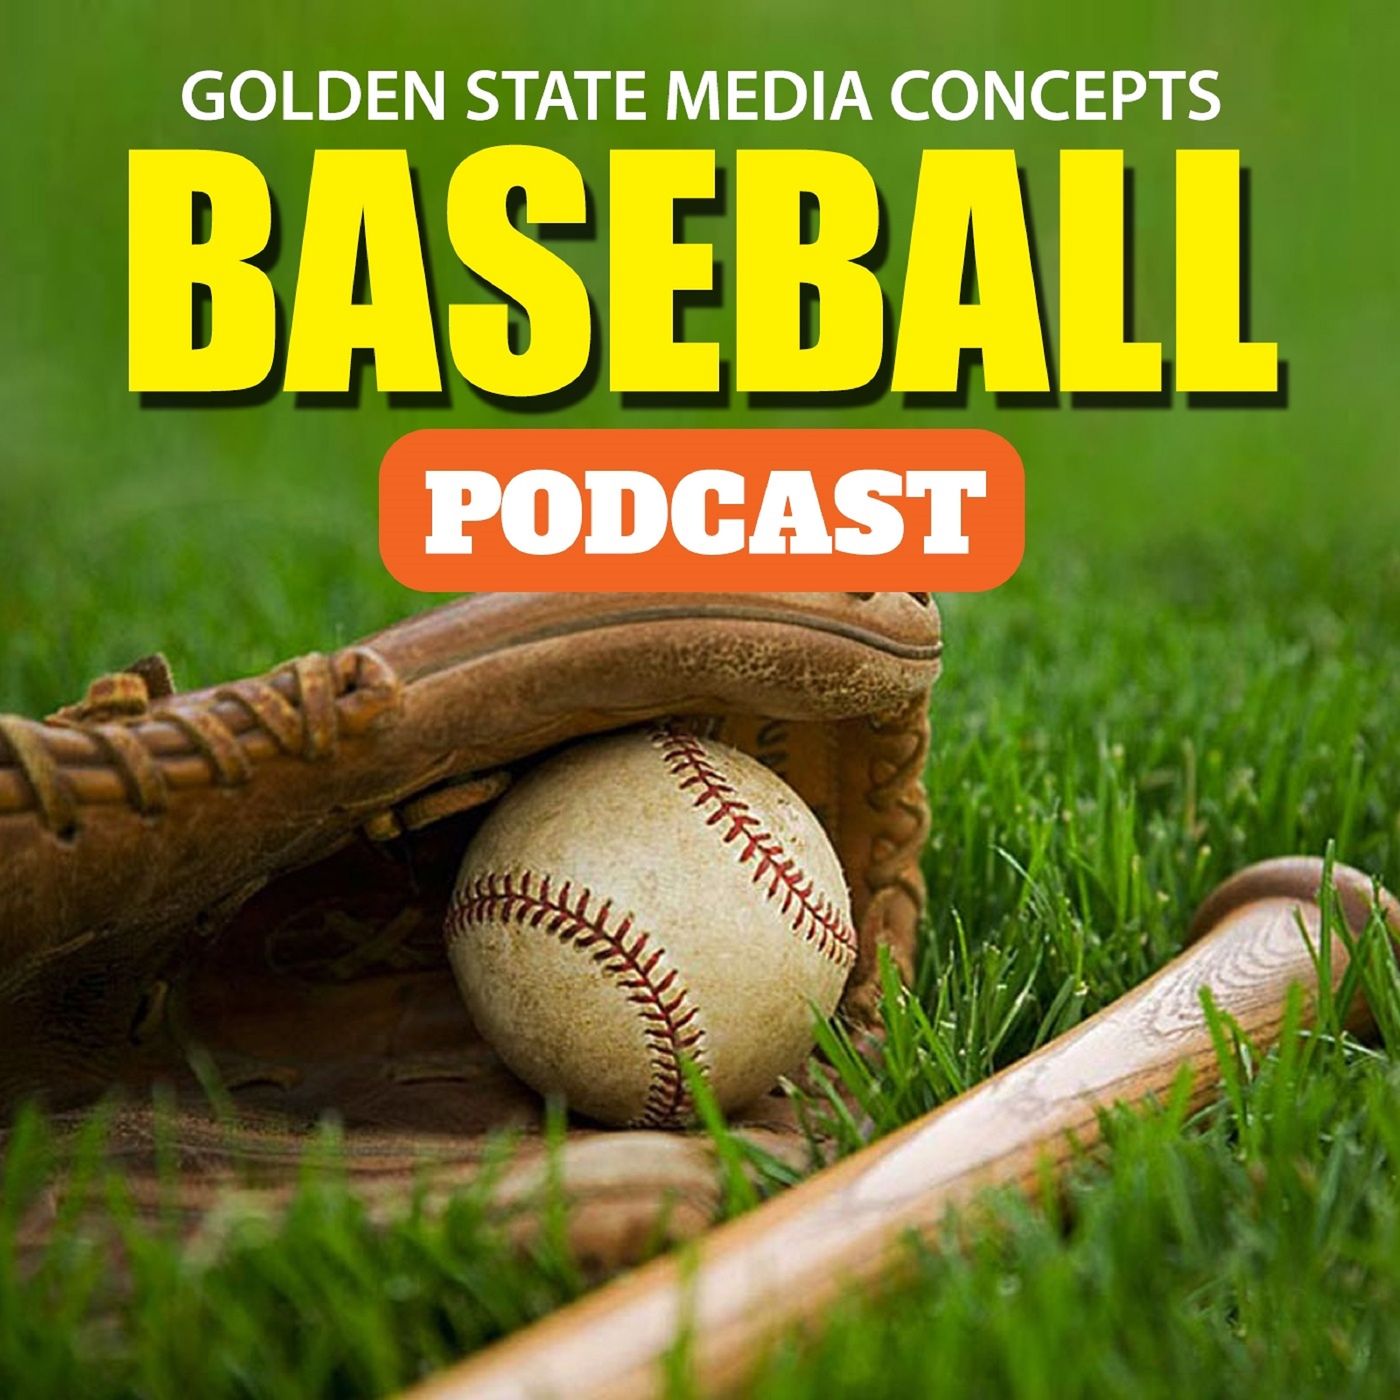 Ronald Acuna Jr out for the season | GSMC Baseball Podcast